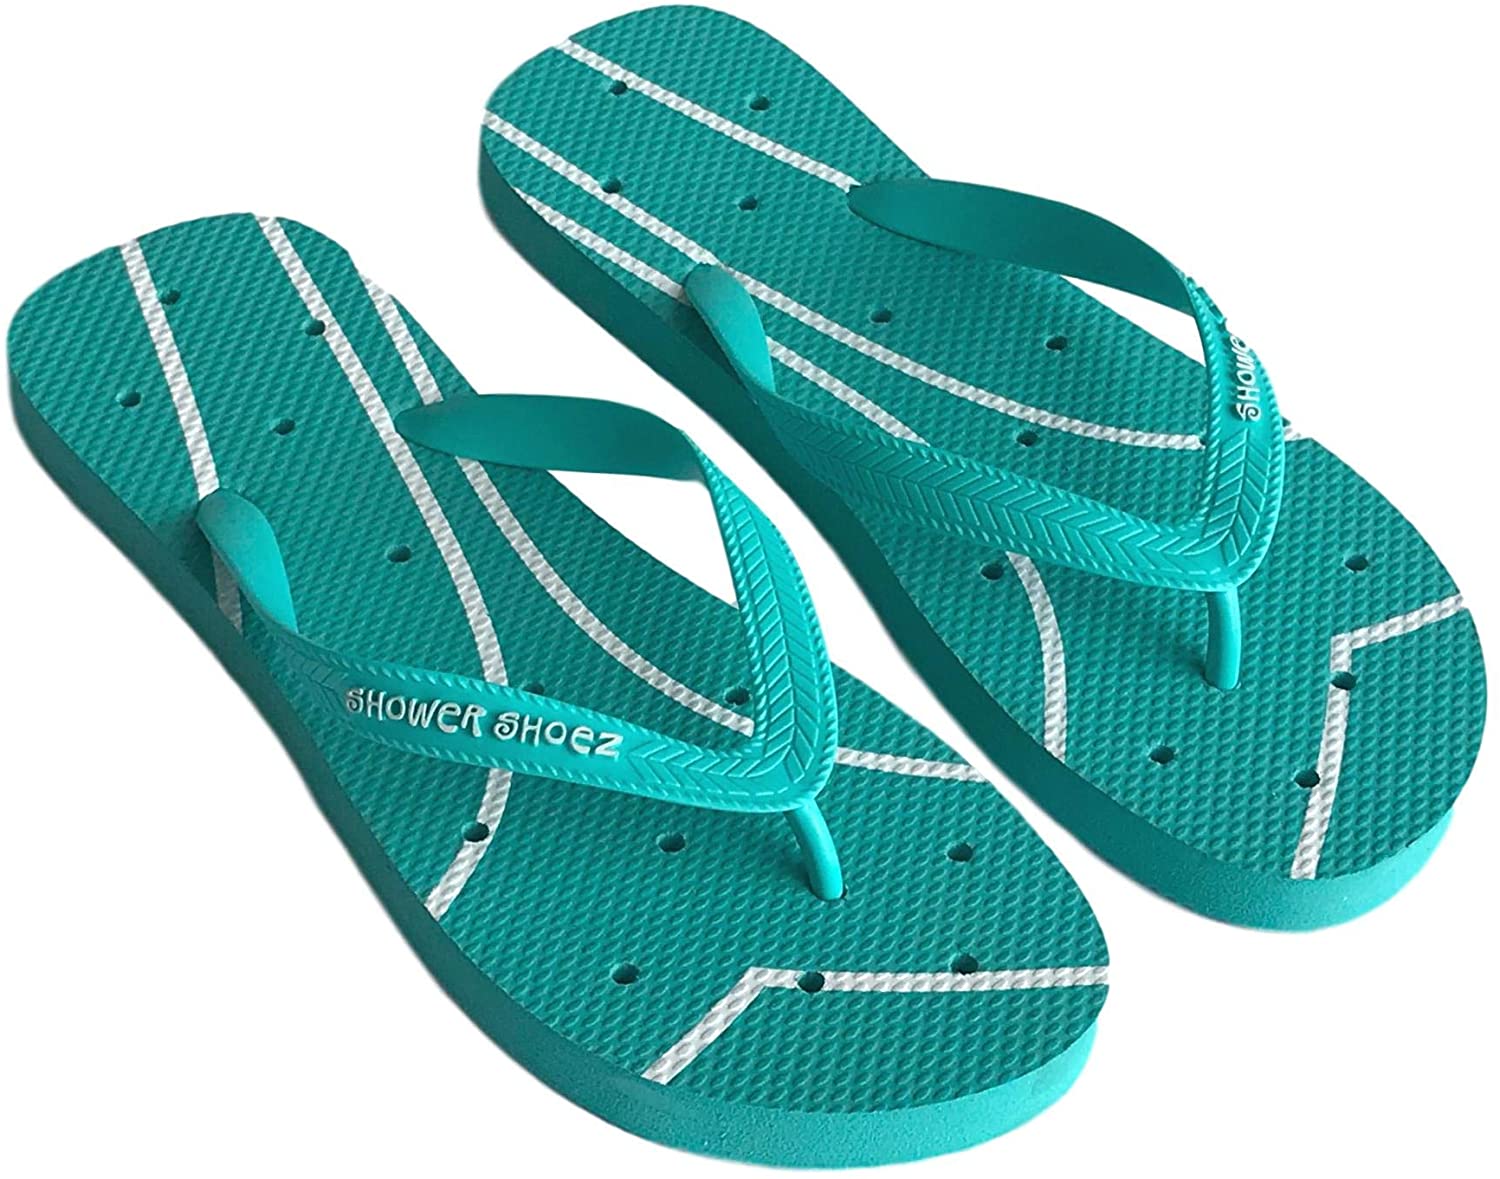 Shower Shoez Womens Non-Slip Pool Dorm Water Sandals Flip Flops